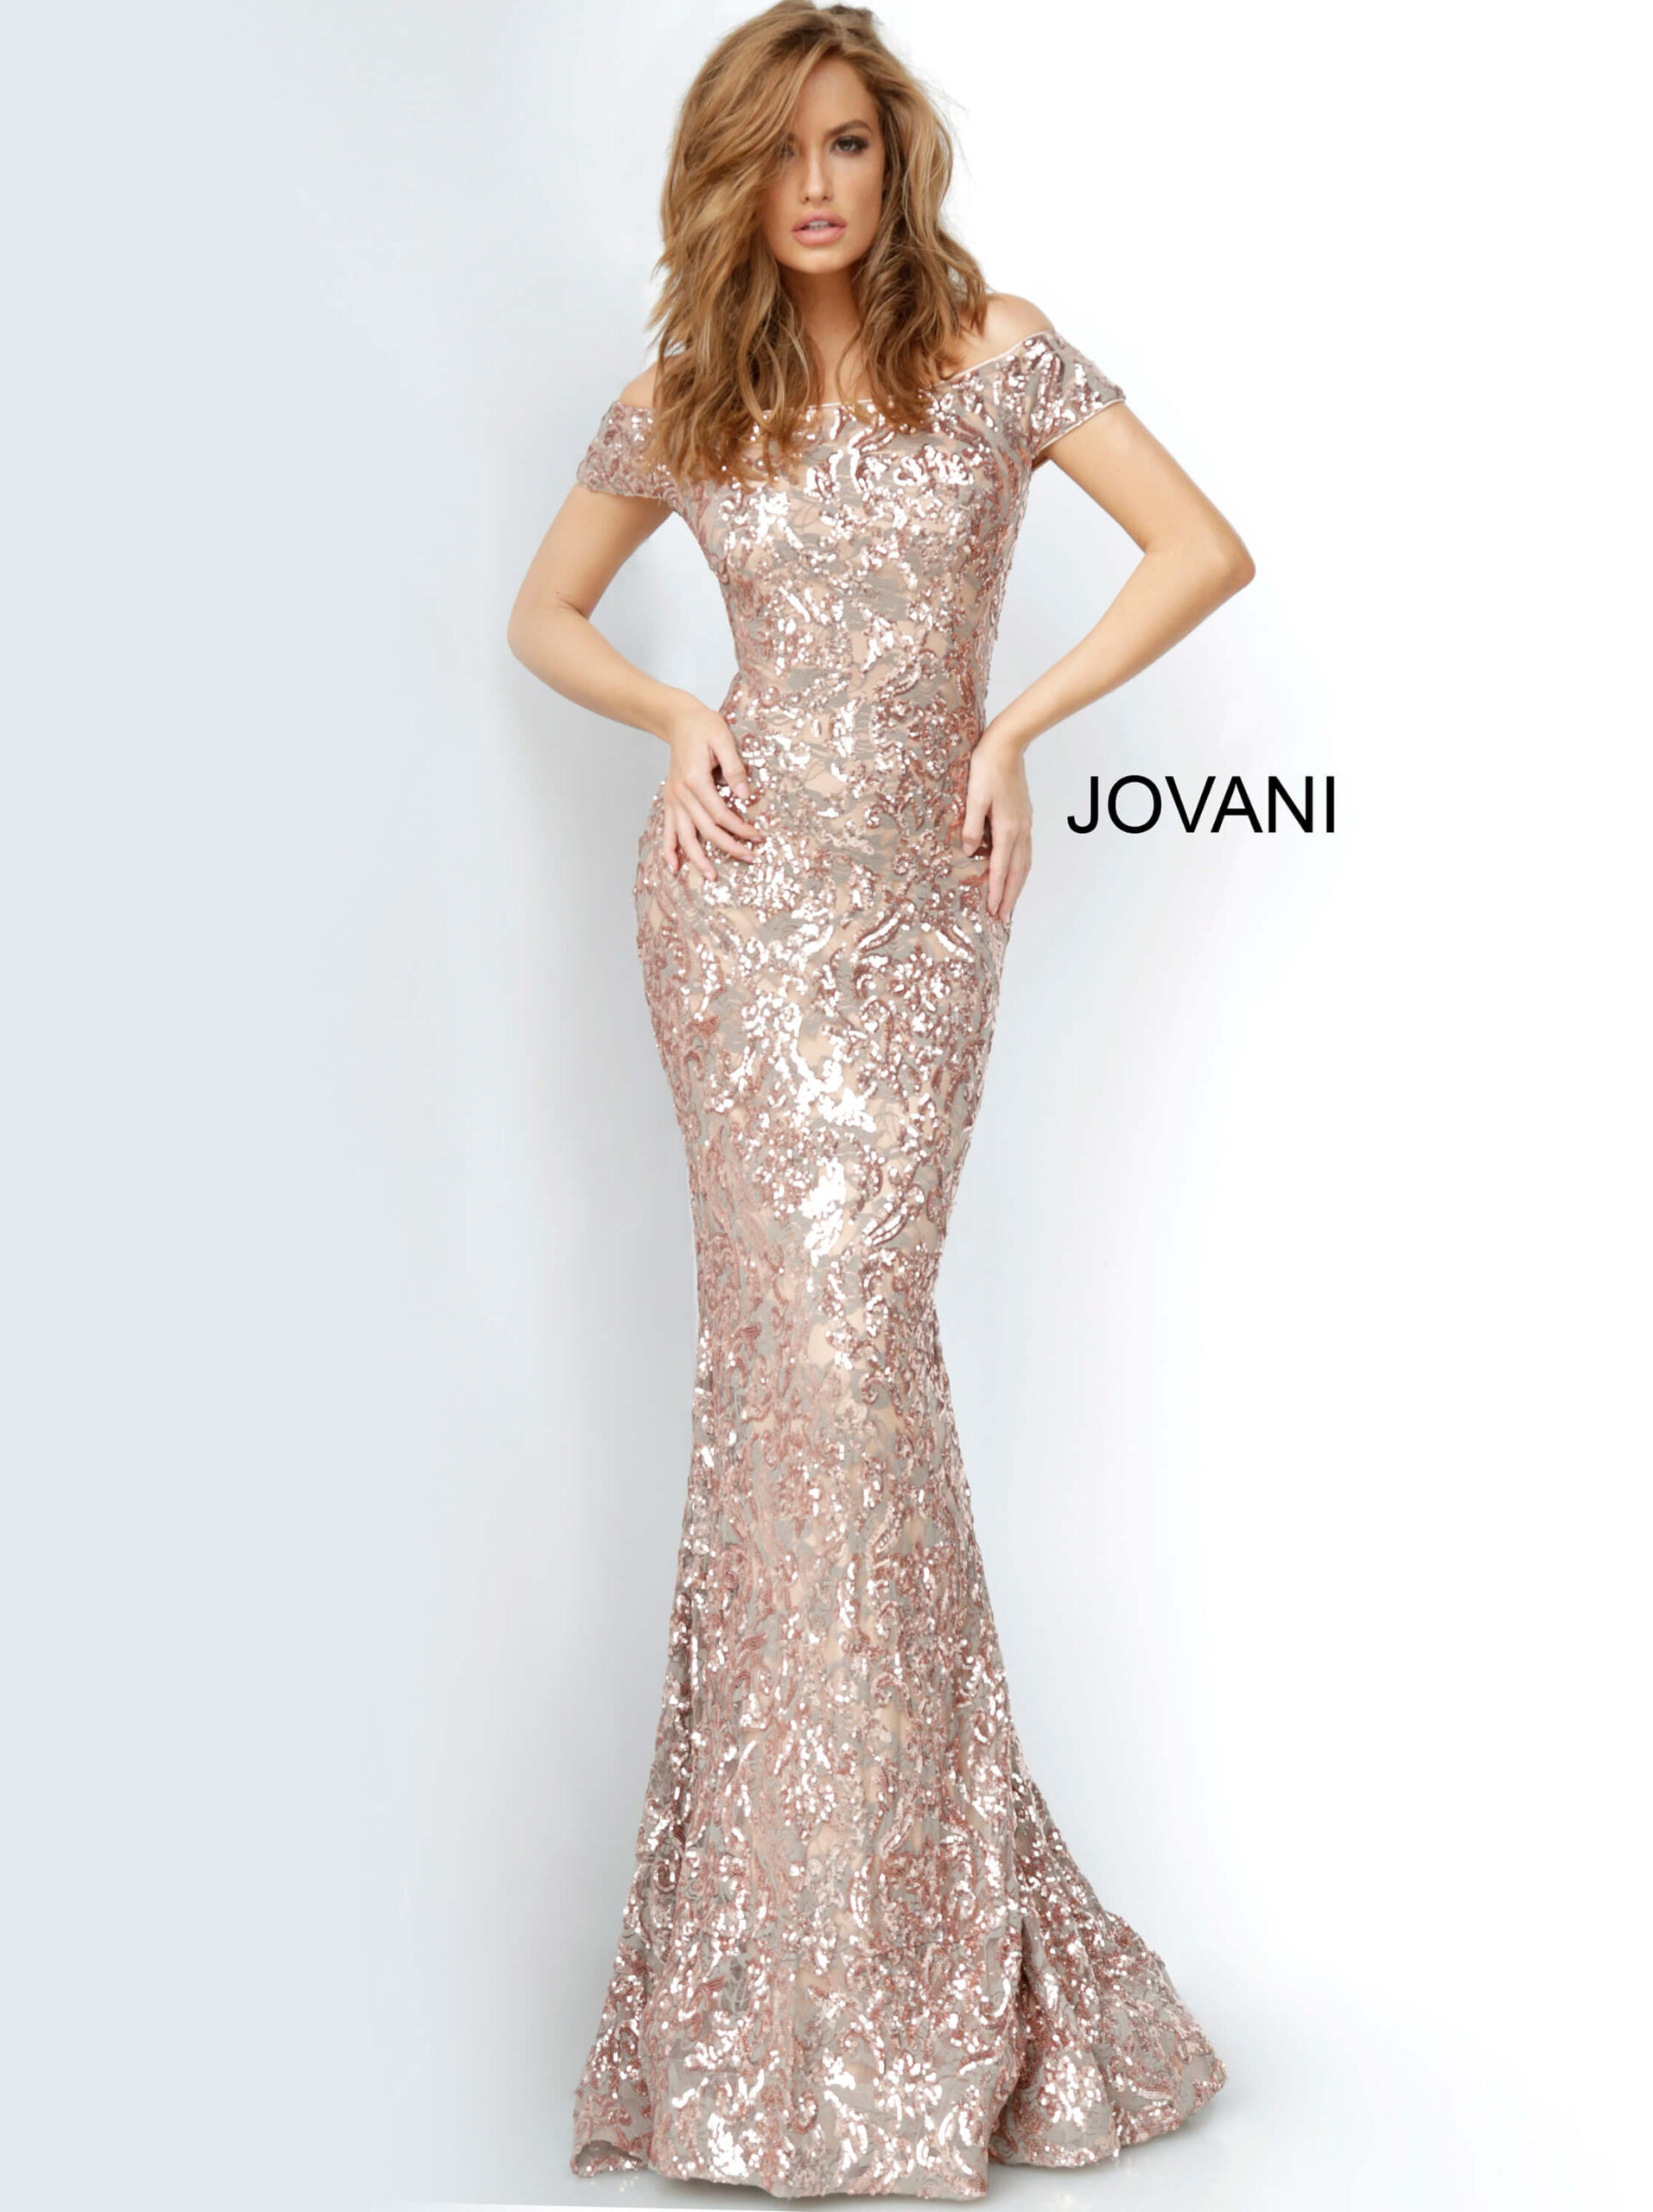 Jovani 1122 Off the Shoulder Sequin Gown